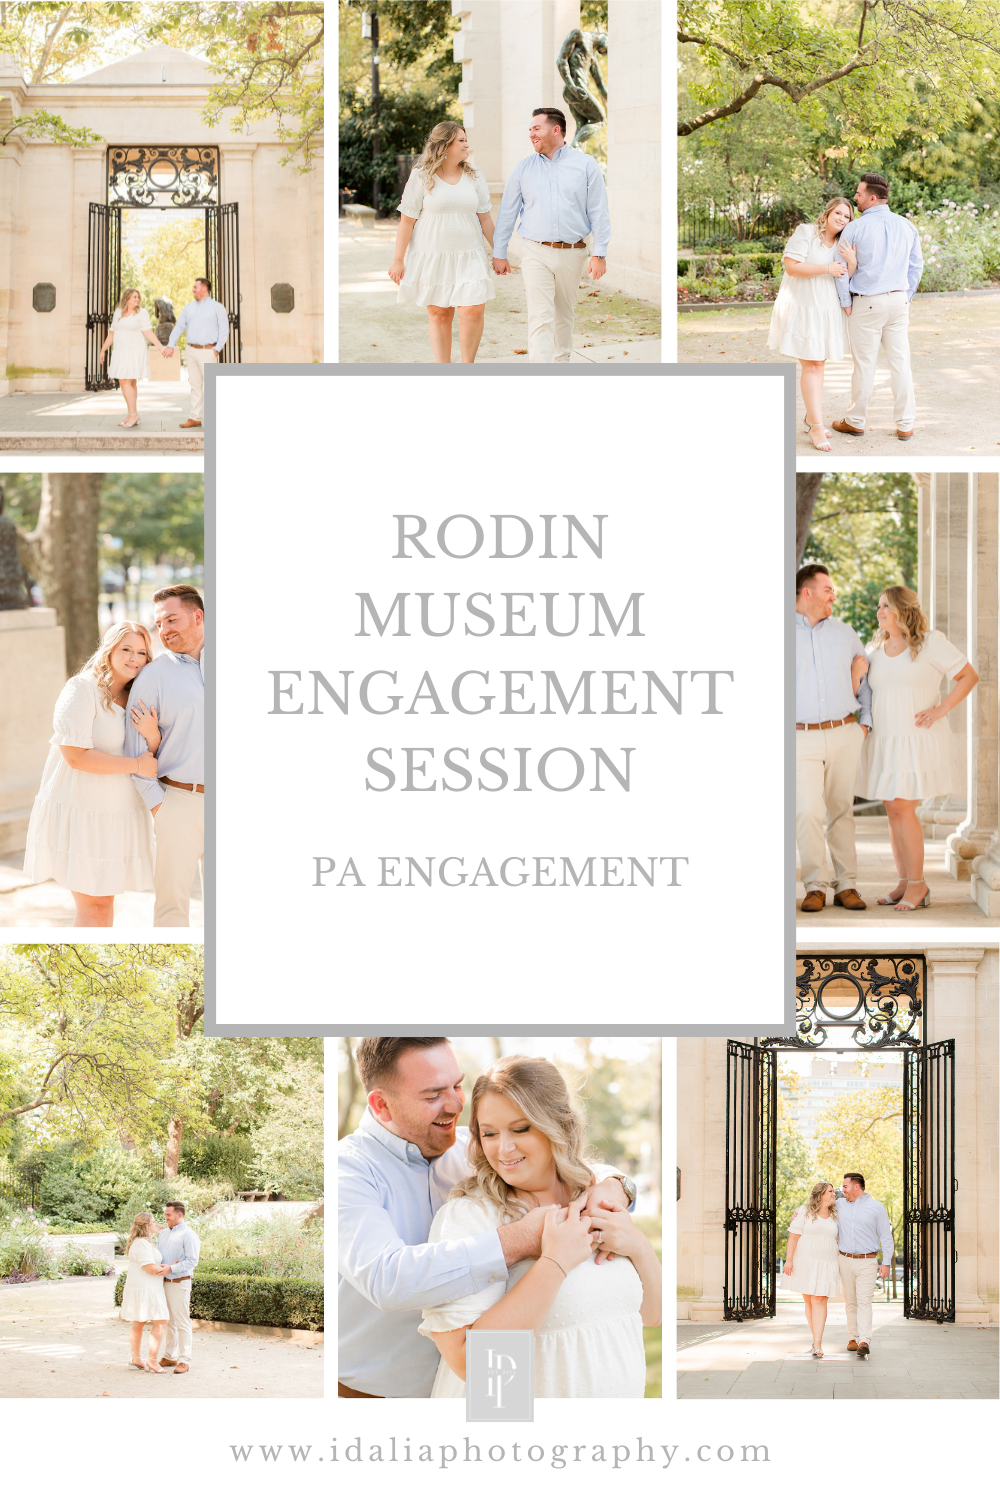 Rodin Museum engagement session in Philadelphia, PA photographed by NJ, NY and PA wedding photographer Idalia Photography.